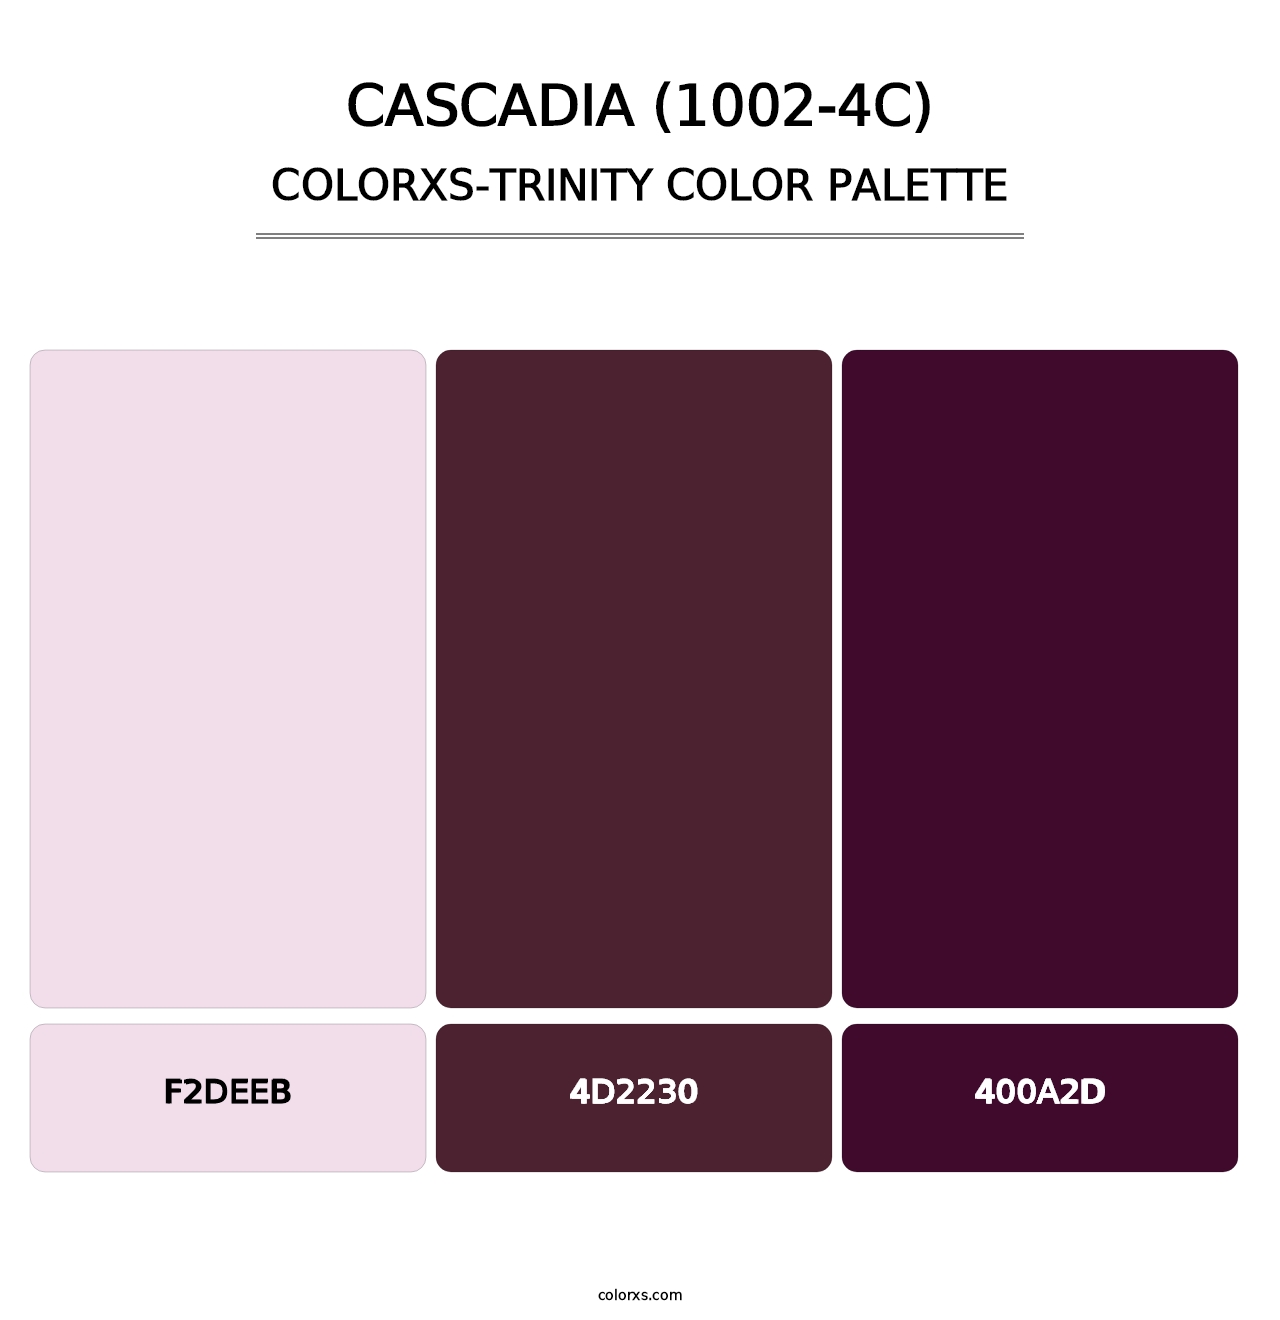 Cascadia (1002-4C) - Colorxs Trinity Palette